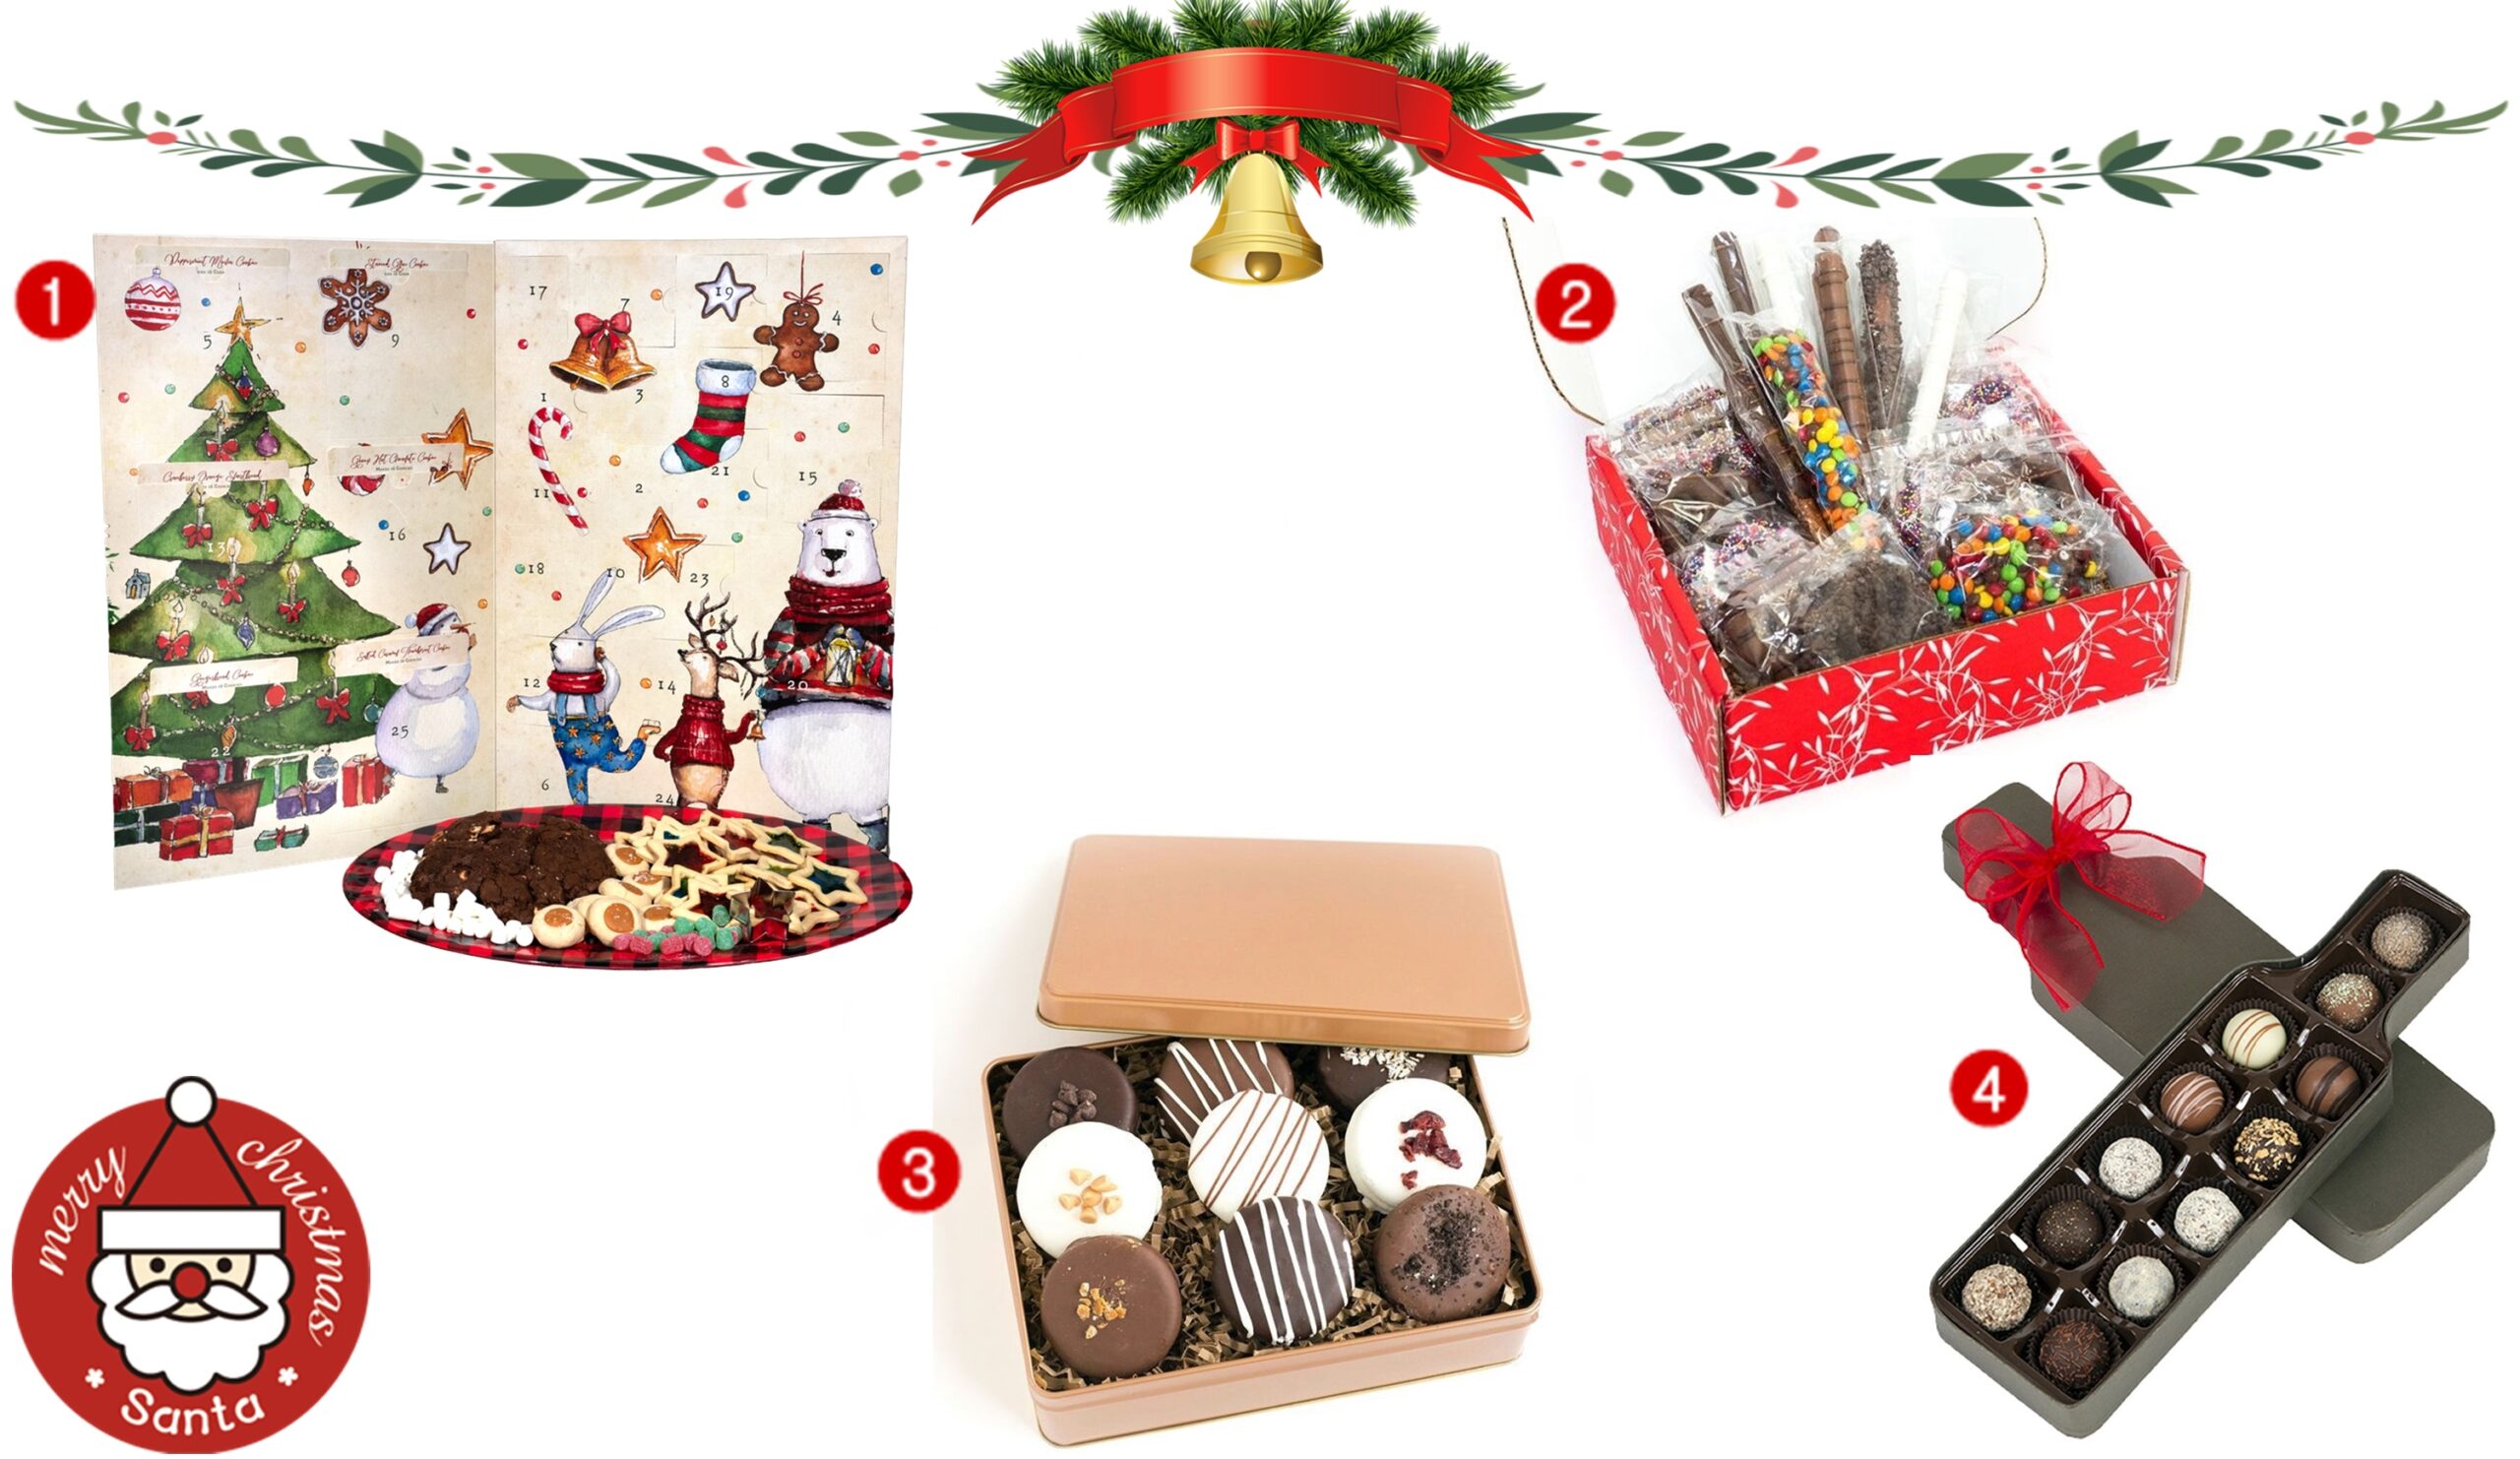 Sweet Holiday Treats: Sugar Plum Delectable Holiday Gift Baskets